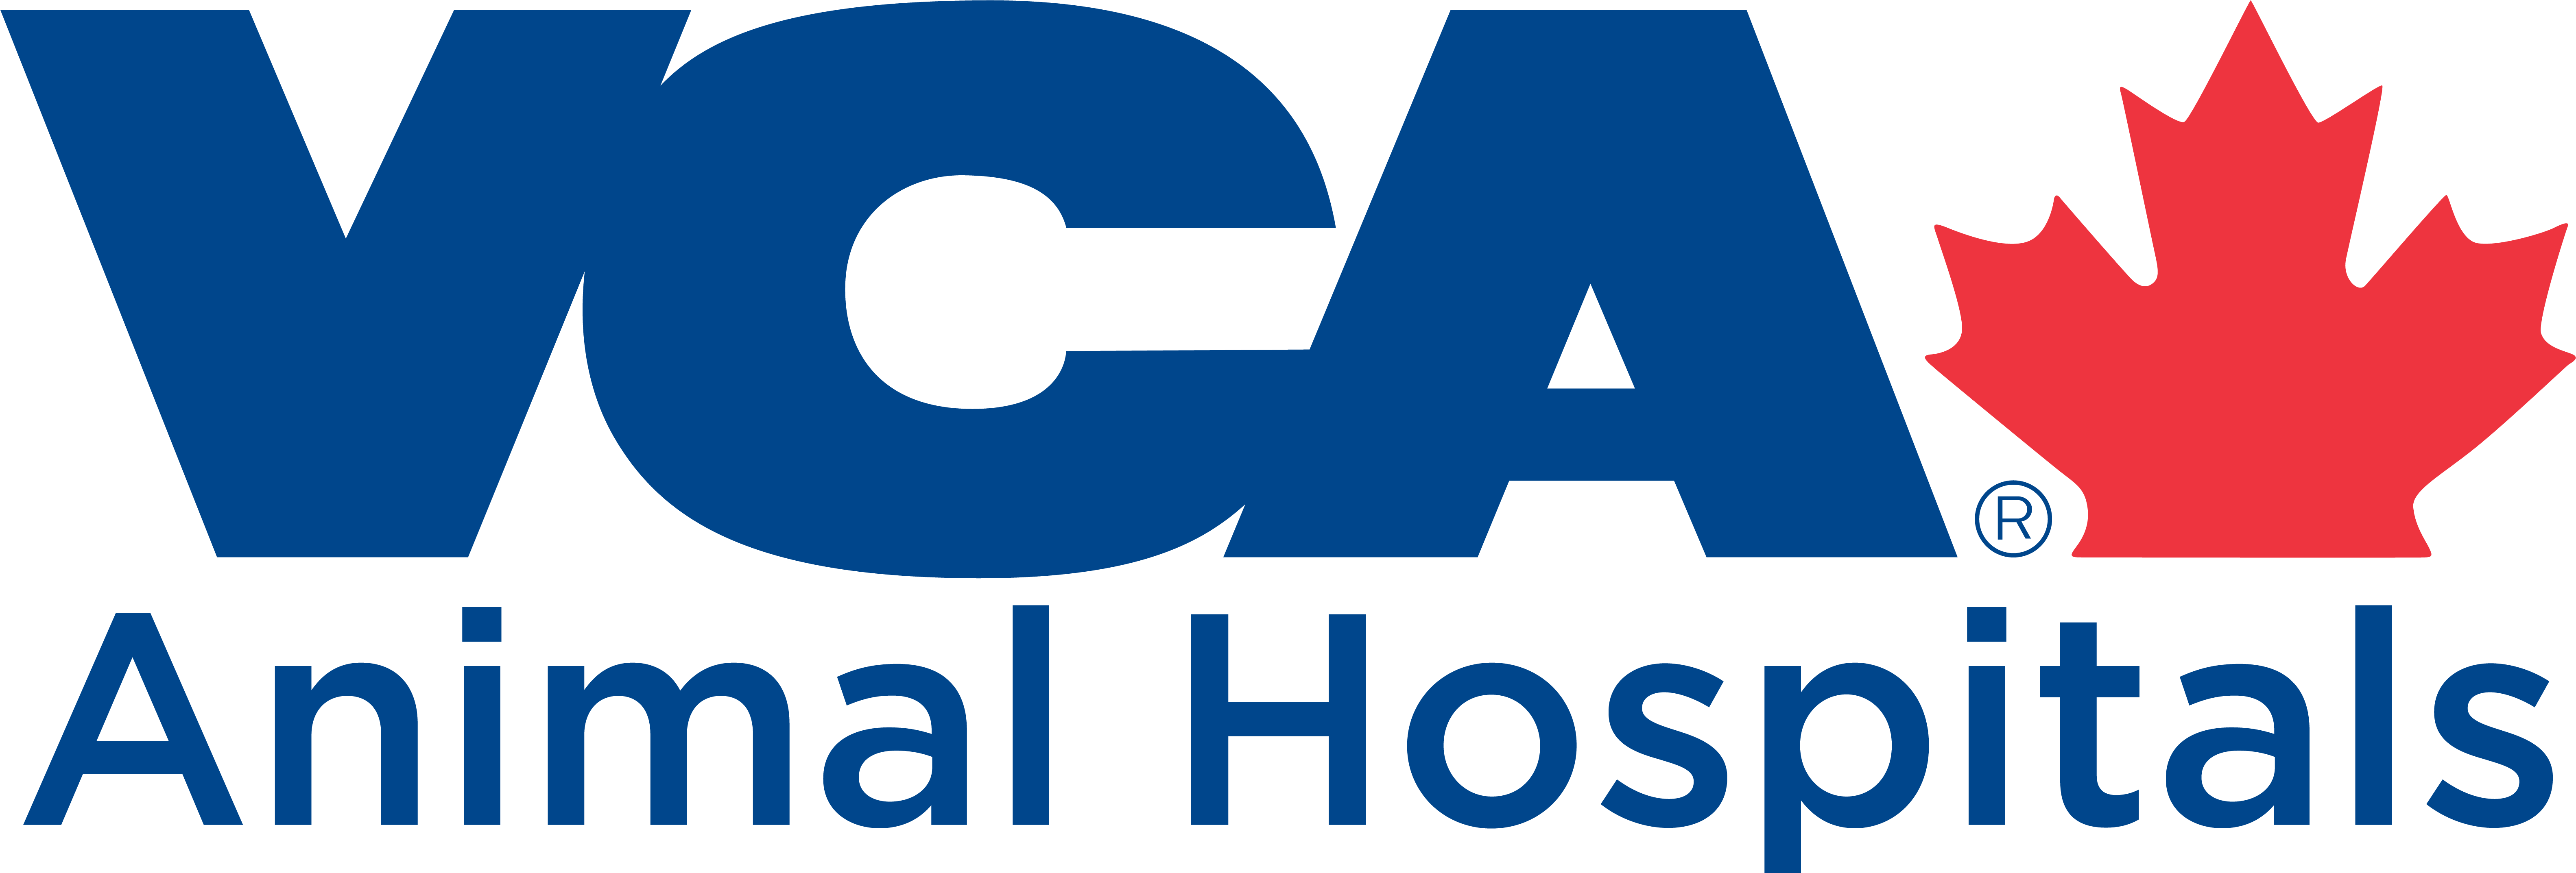 VCA Animal Hospitals Logo